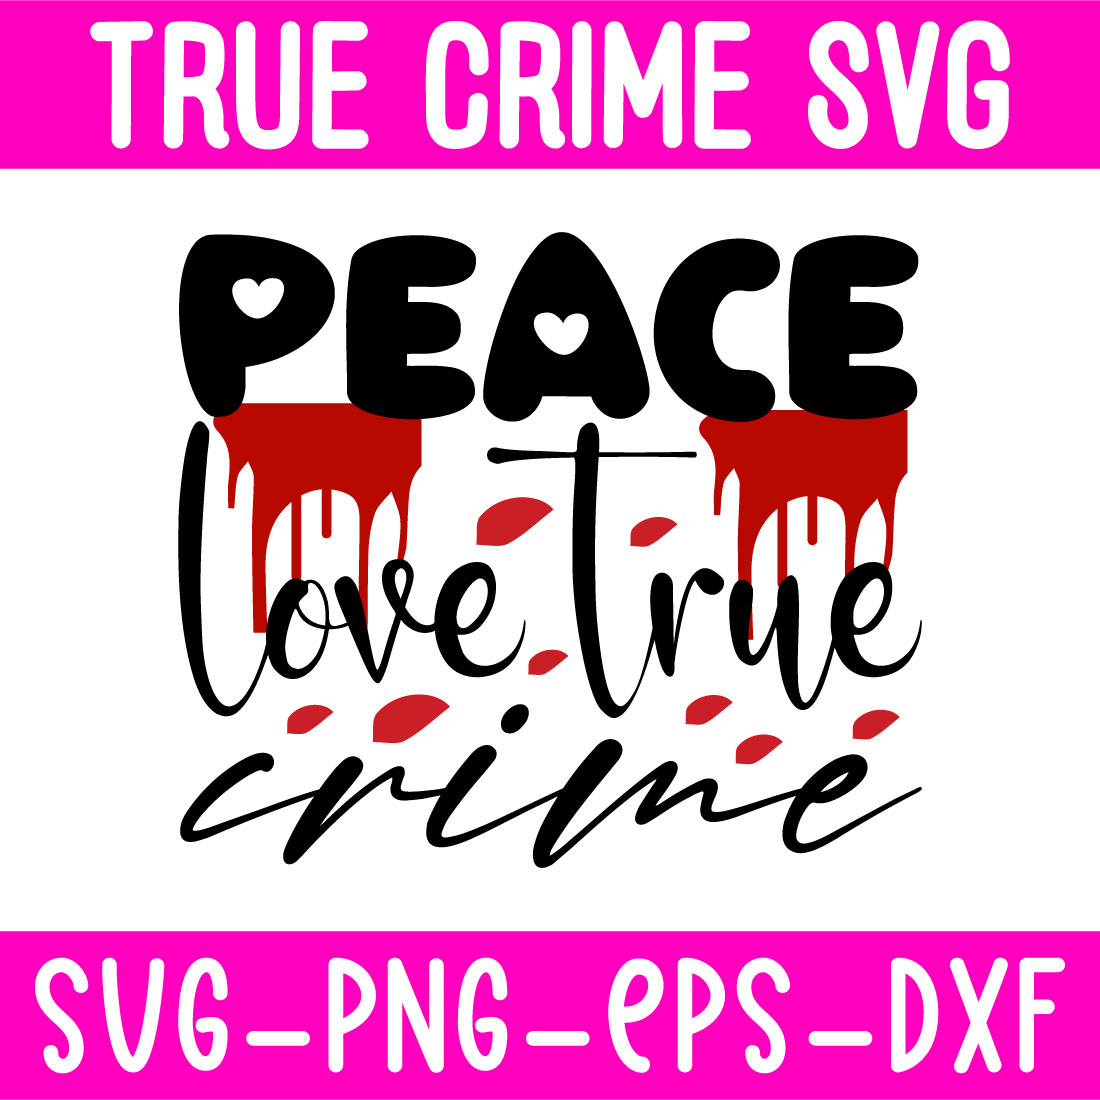 True Crime Svg preview image.